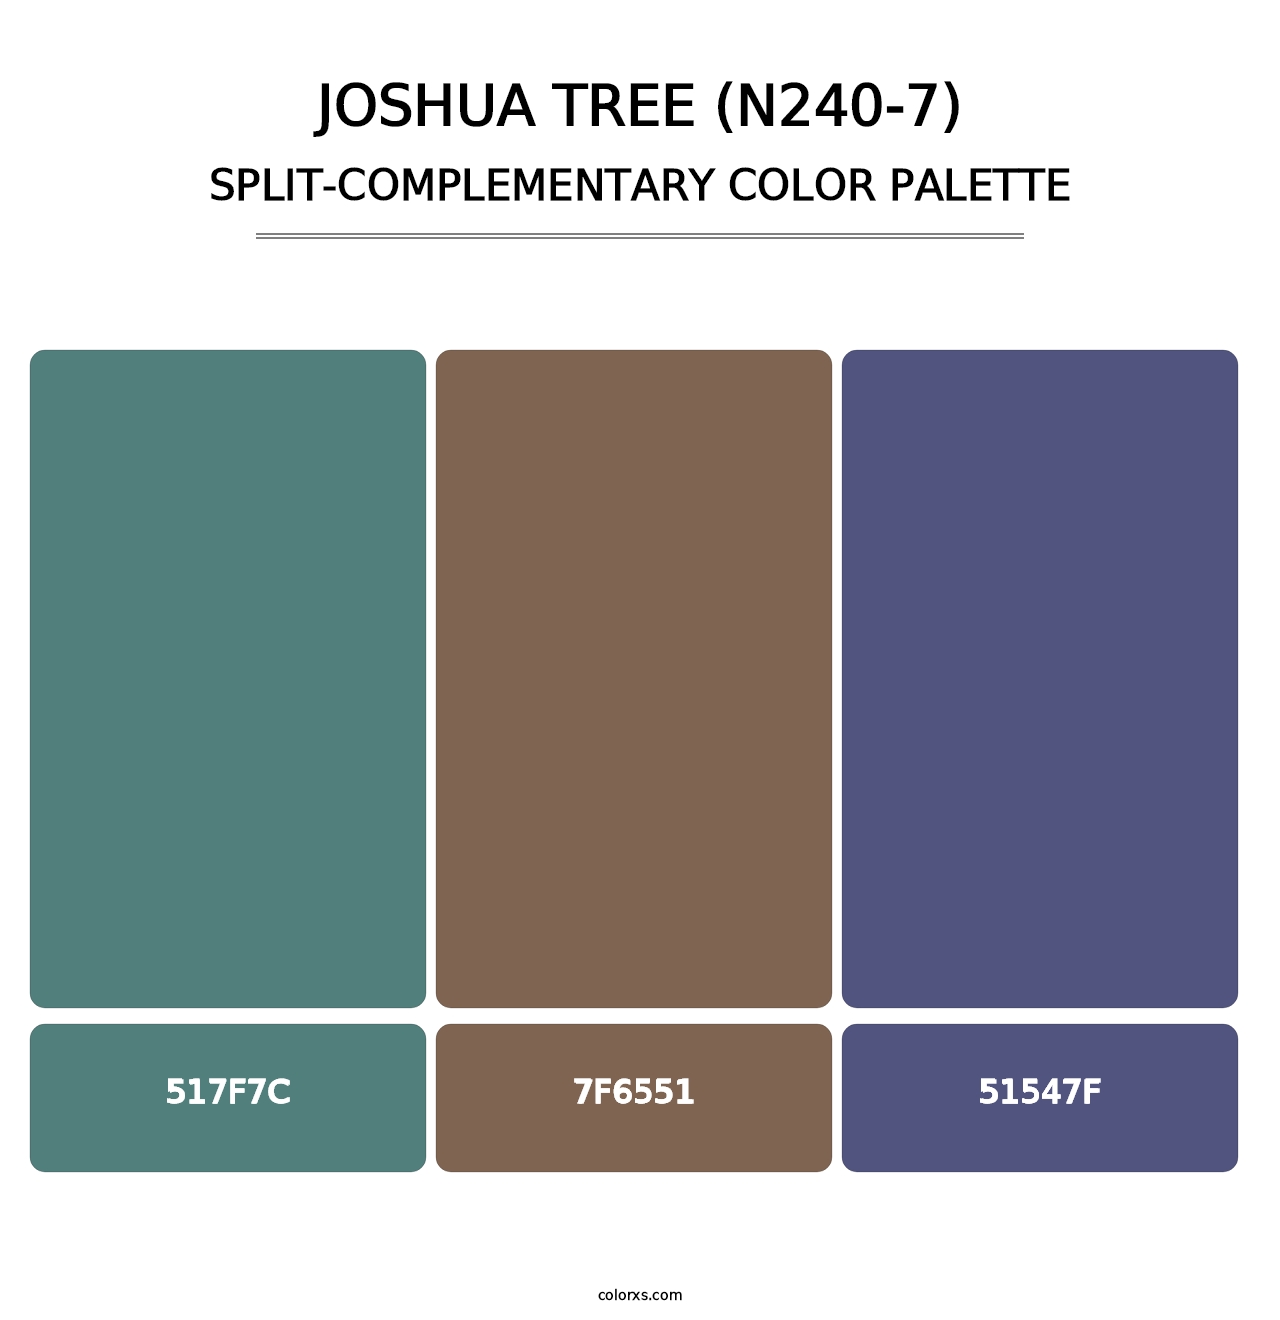 Joshua Tree (N240-7) - Split-Complementary Color Palette